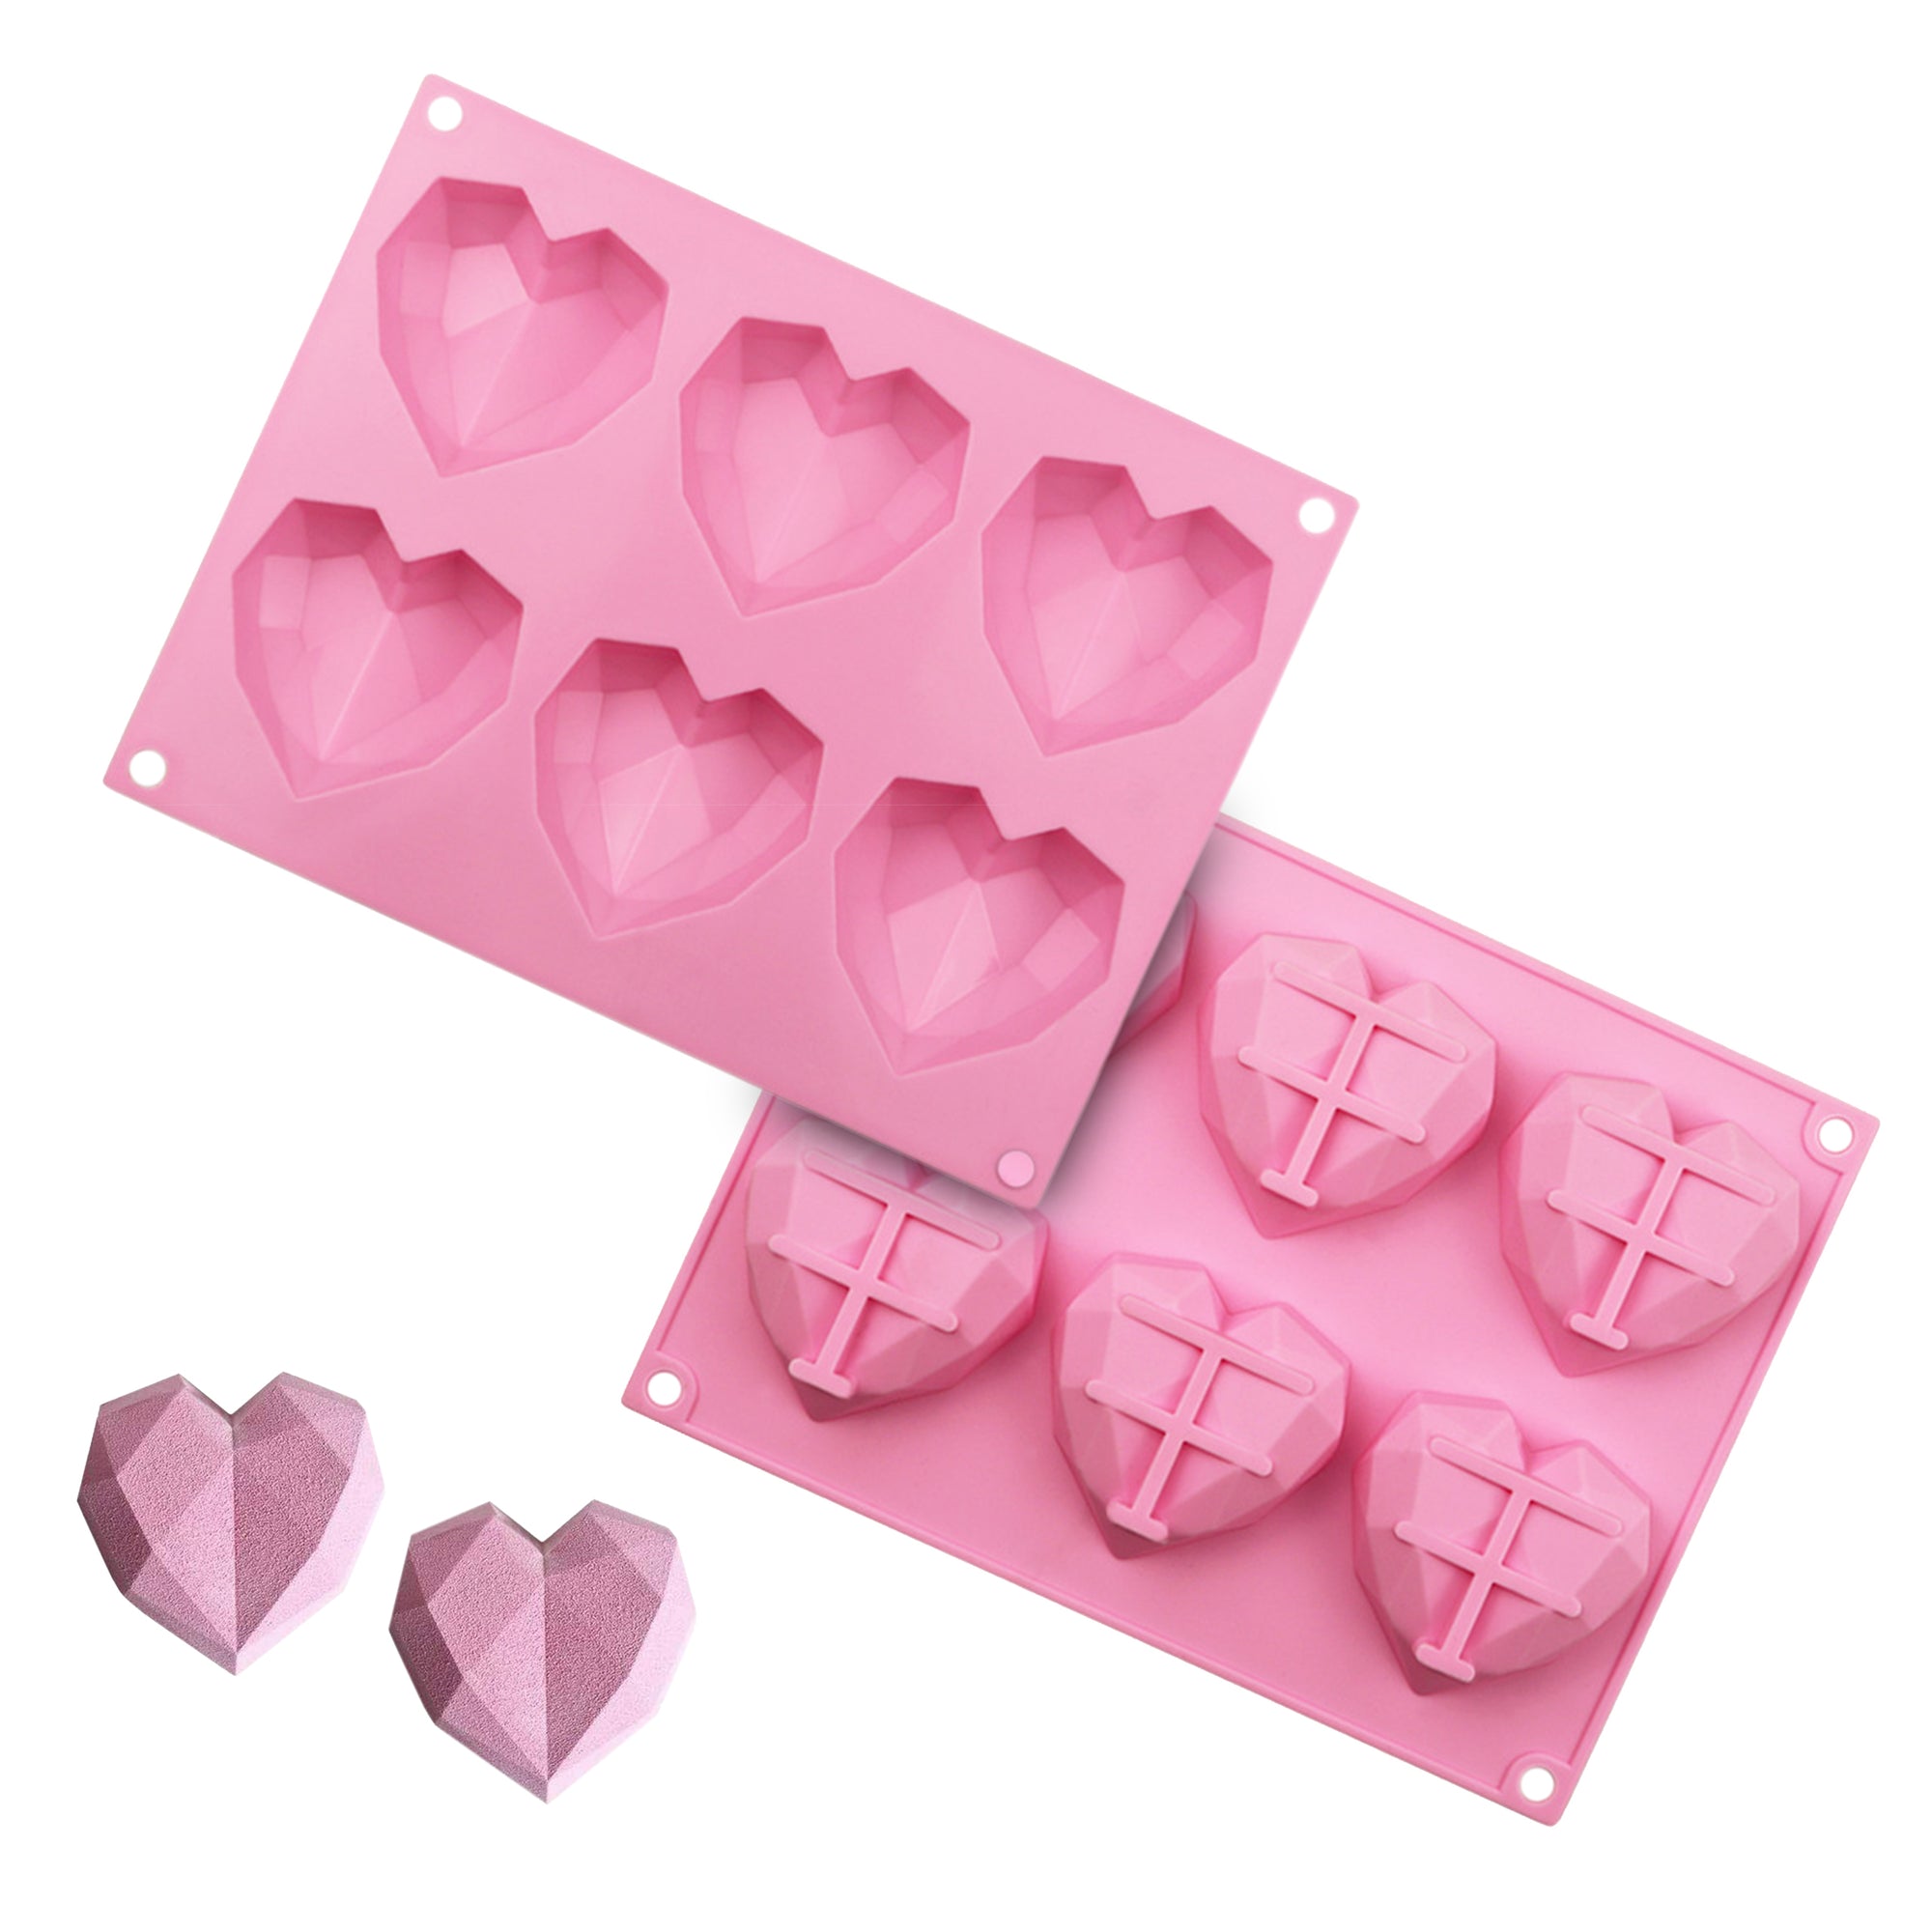 Geometric Heart Mold - Heart Mold - Silicone Mold - 3D Silicone Heart Mold